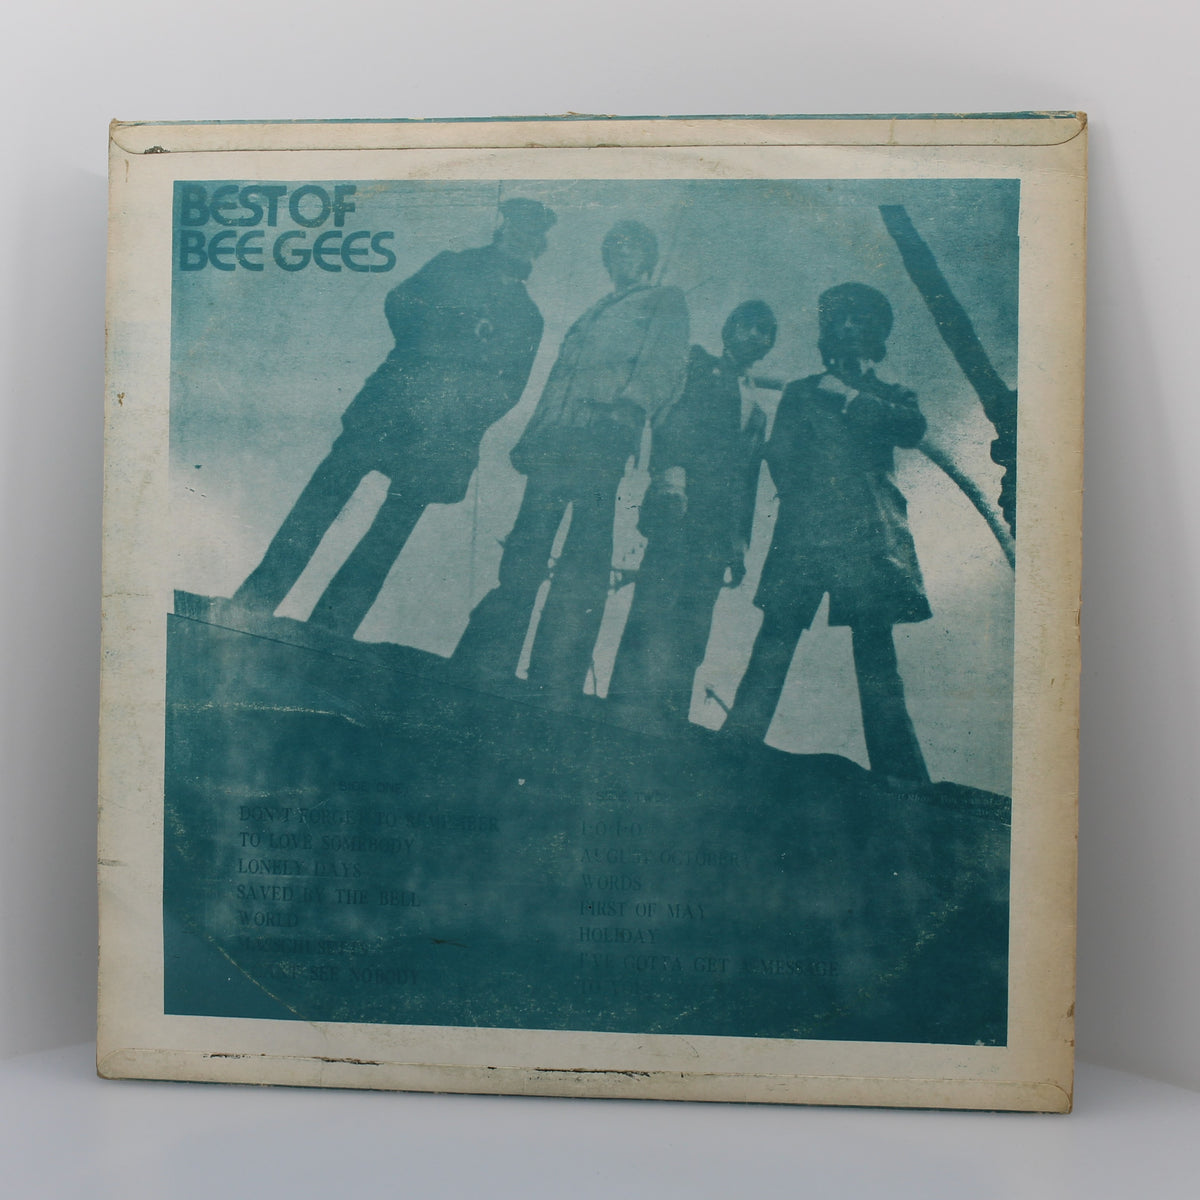 Bee Gees - Best Of, Vinyl LP 33Rpm